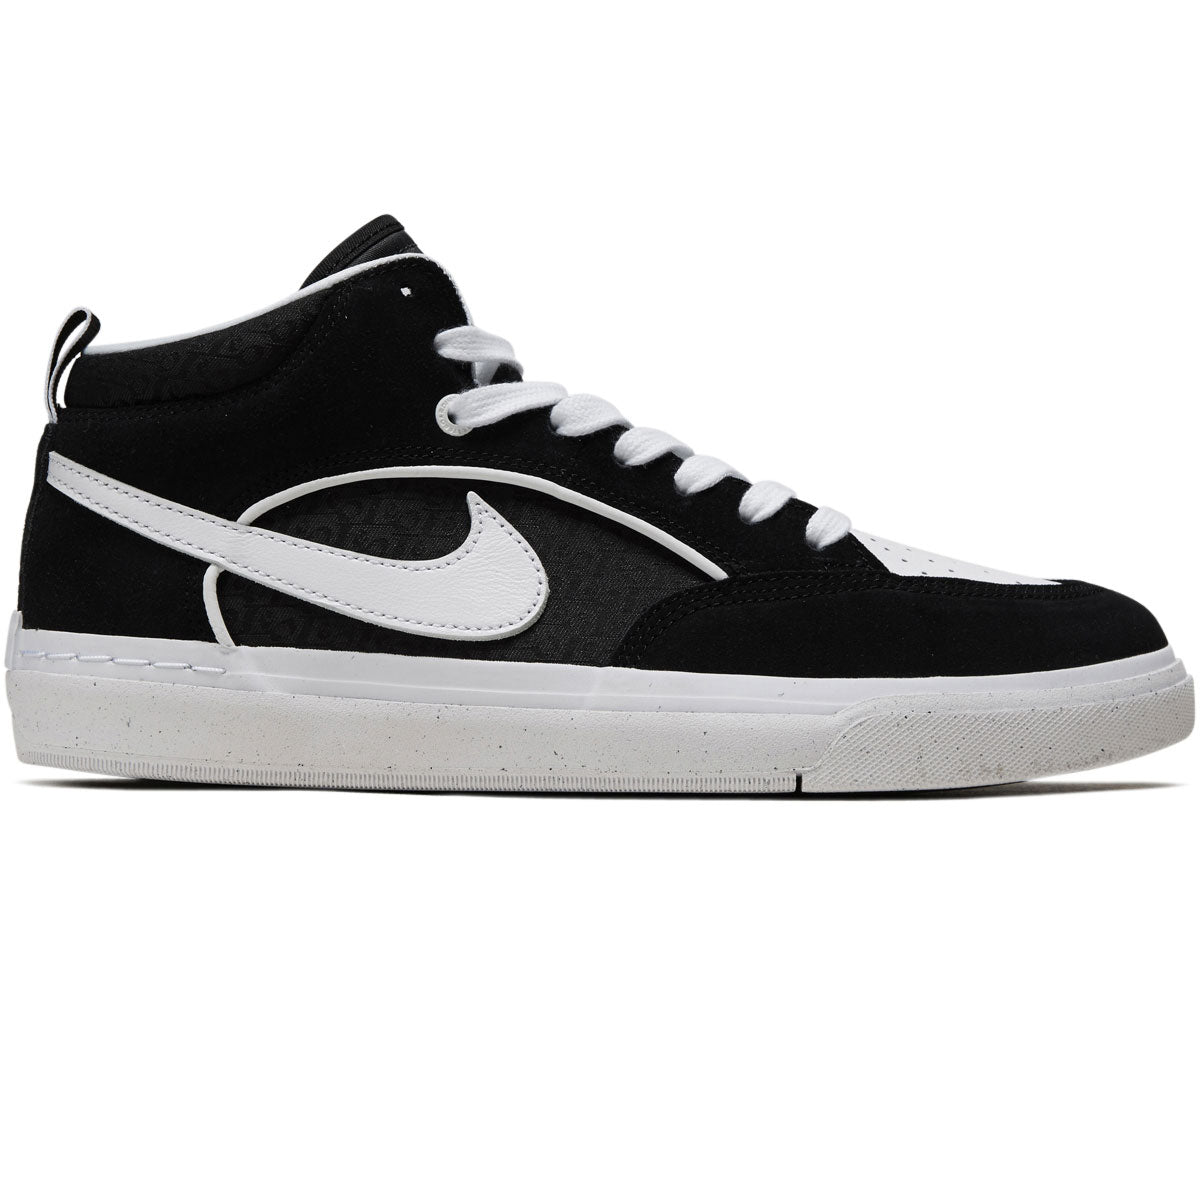 Nike SB React Leo Shoes - Black/White/Black/Gum Light Brown image 1